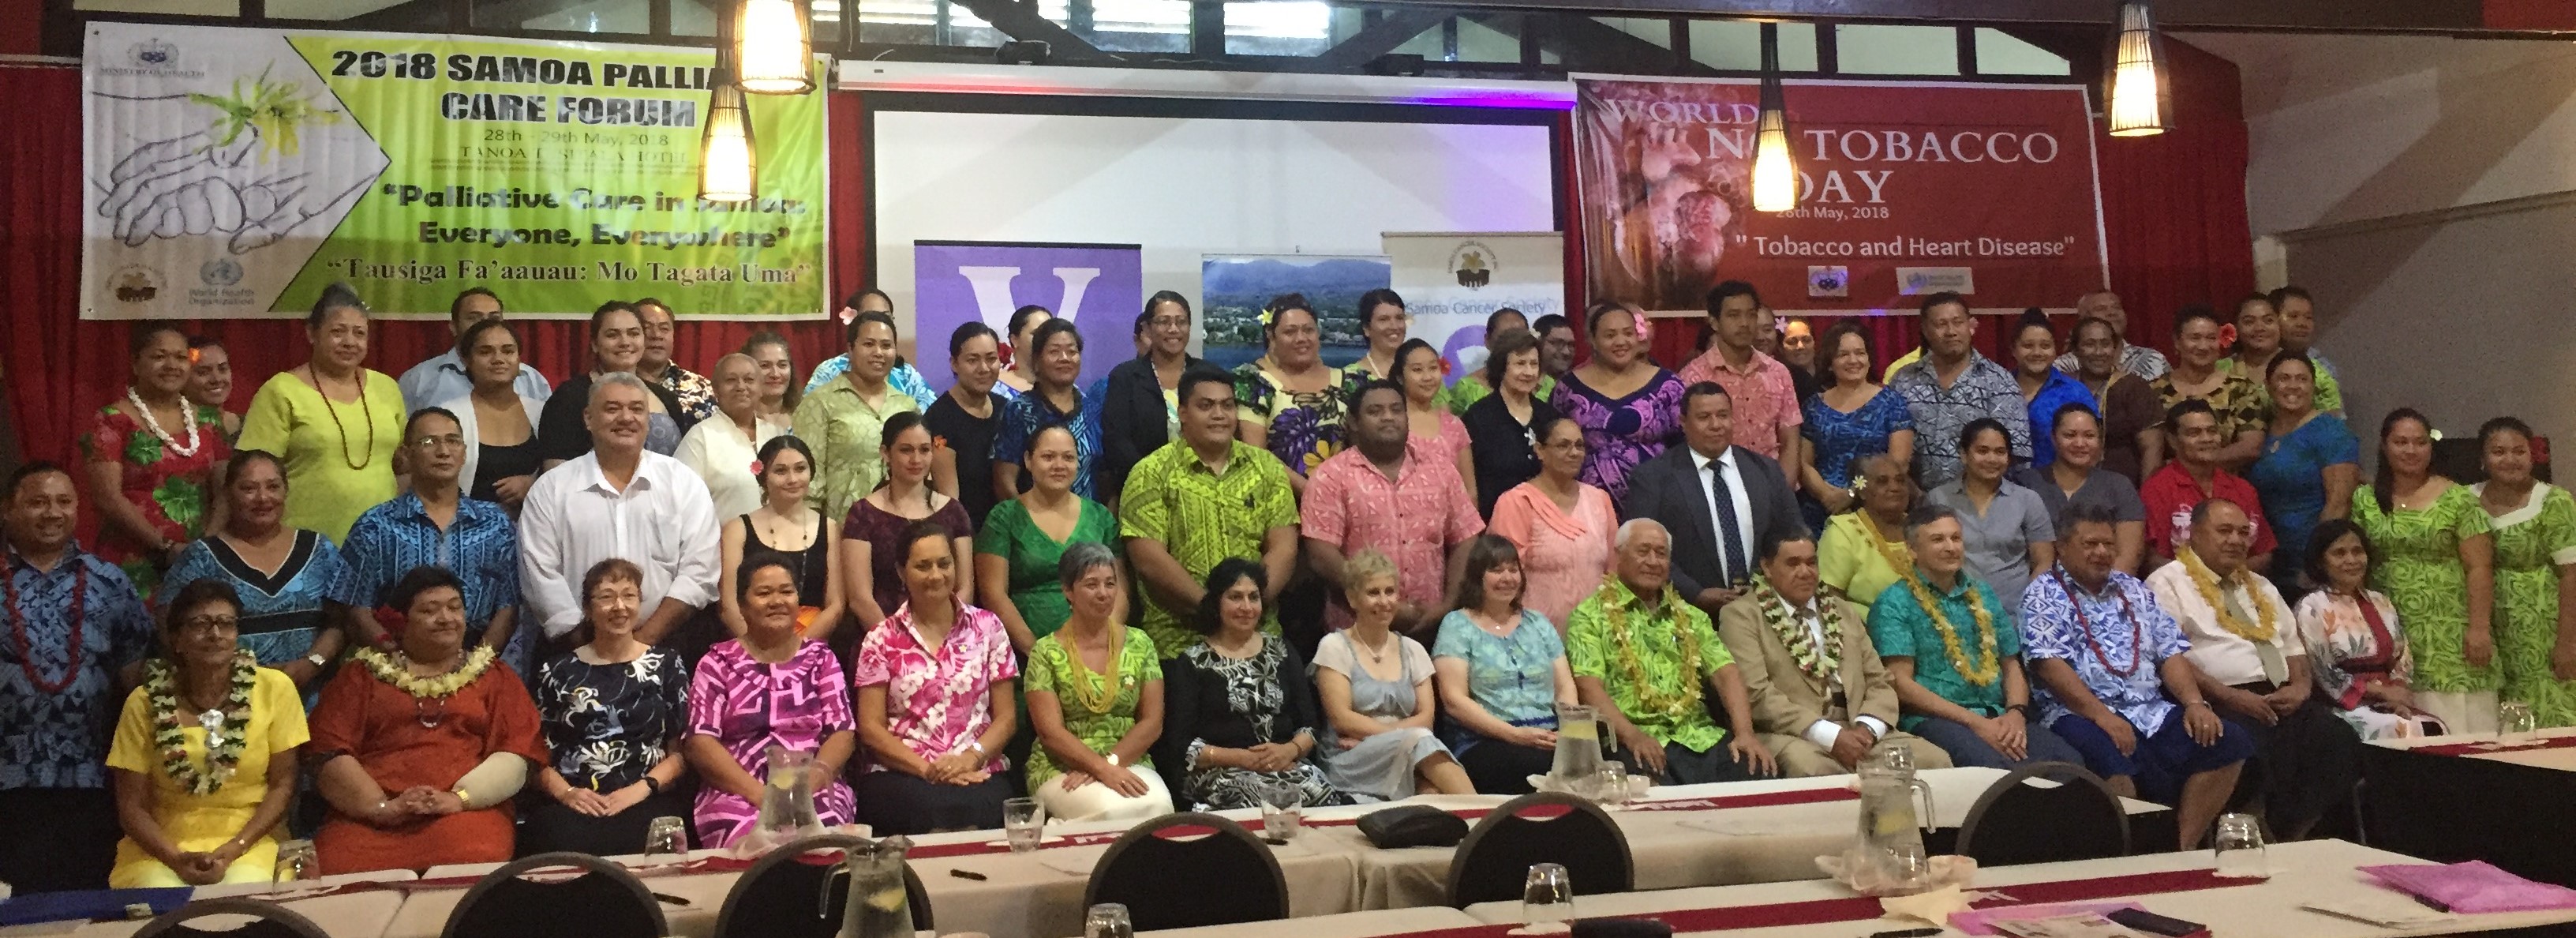 2018 Samoa Palliative Care Forum (Credit: Asia Pacific Hospice Palliative Care Network)